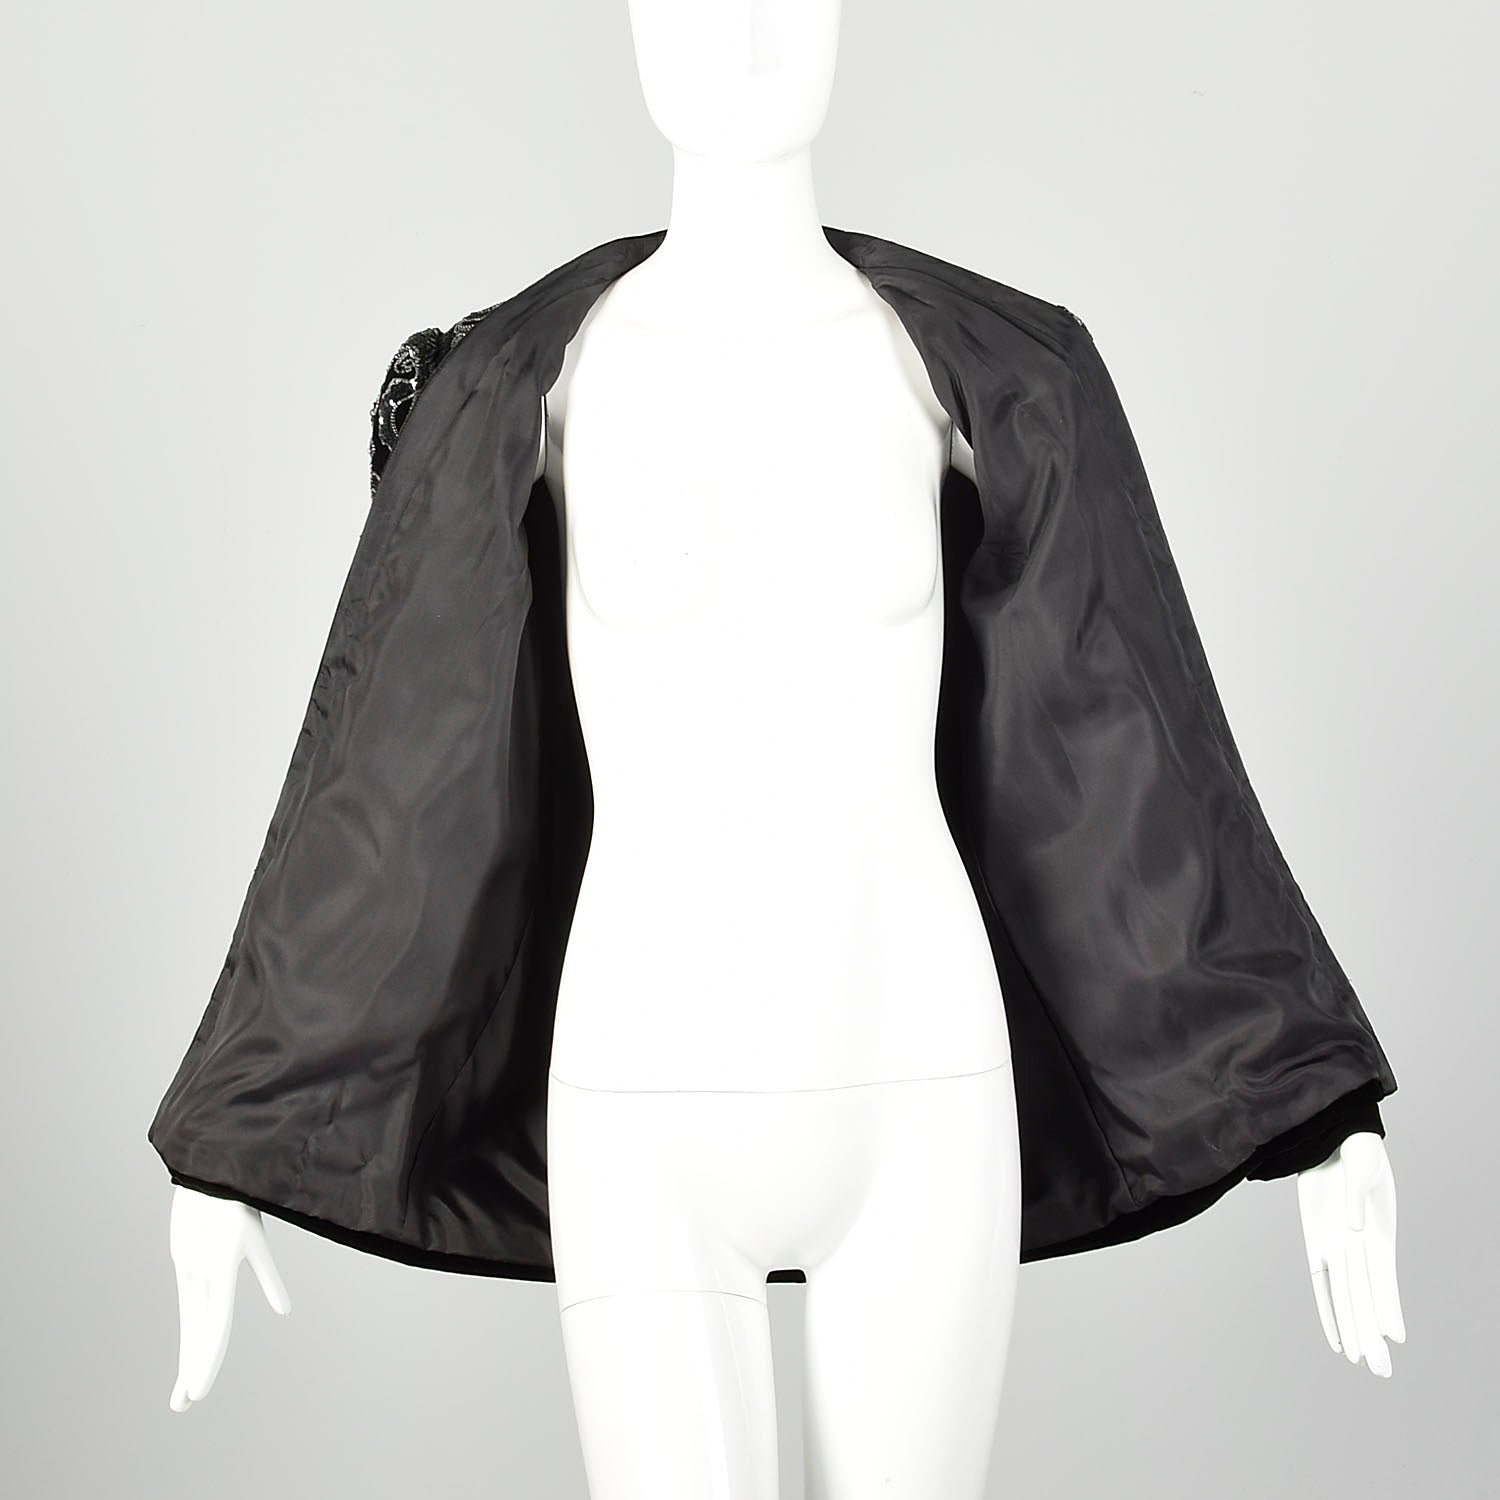 Medium 1980s Black Velvet Jacket Silver Sequin Evening Coat